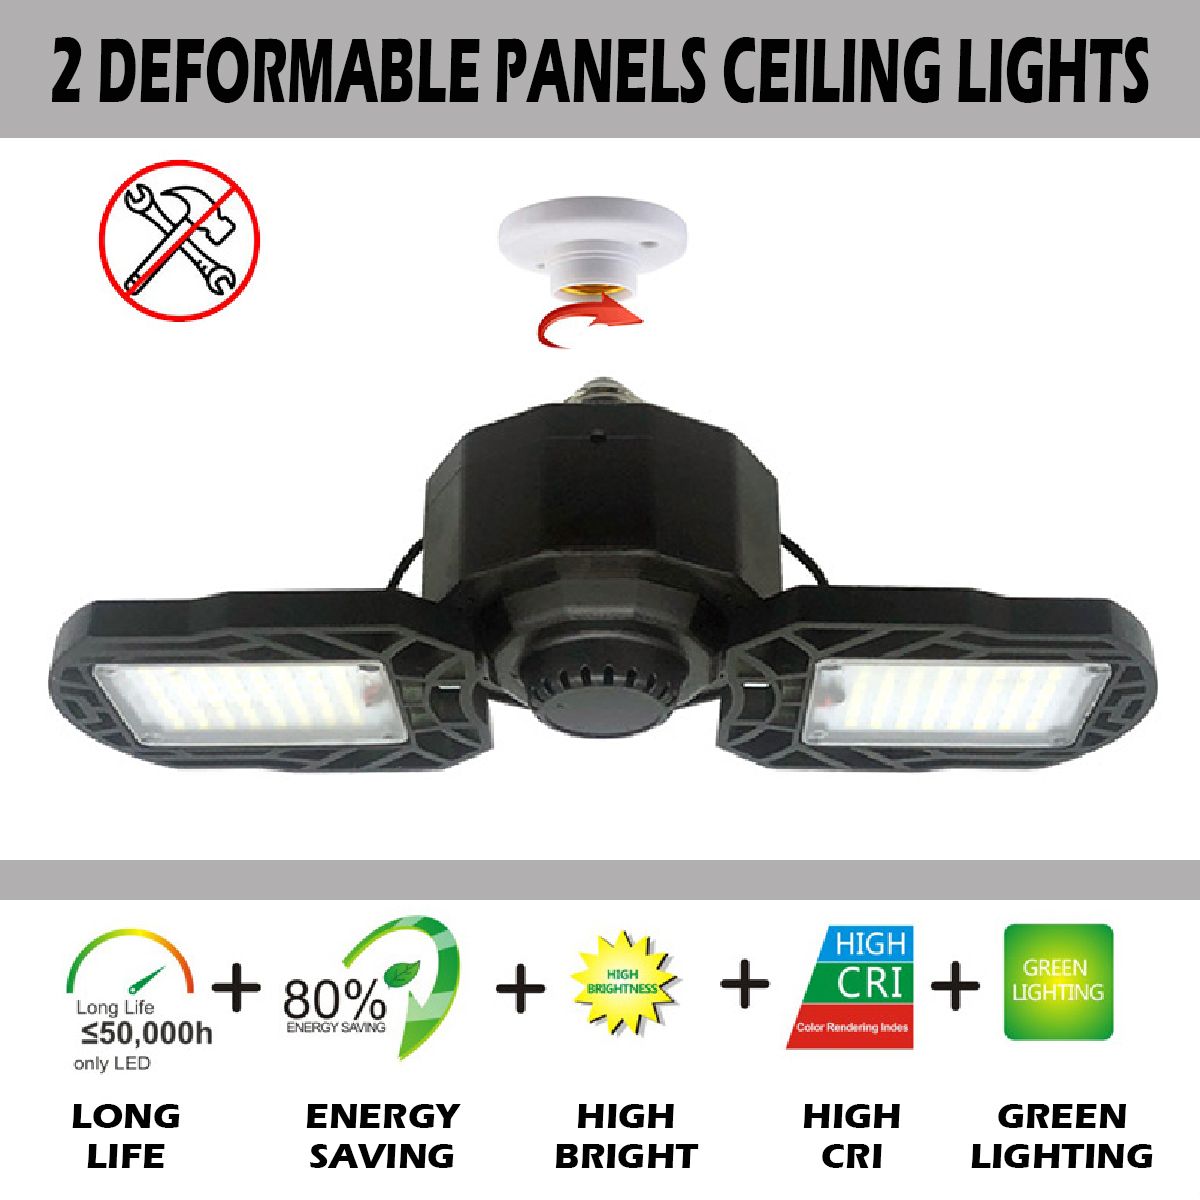 30W-LED-Garage-Lamp-3000LM-Shop-Work-E27-Light-Bulb-Home-Ceiling-Fixture-Deformable-Lighting-85-265V-1691038